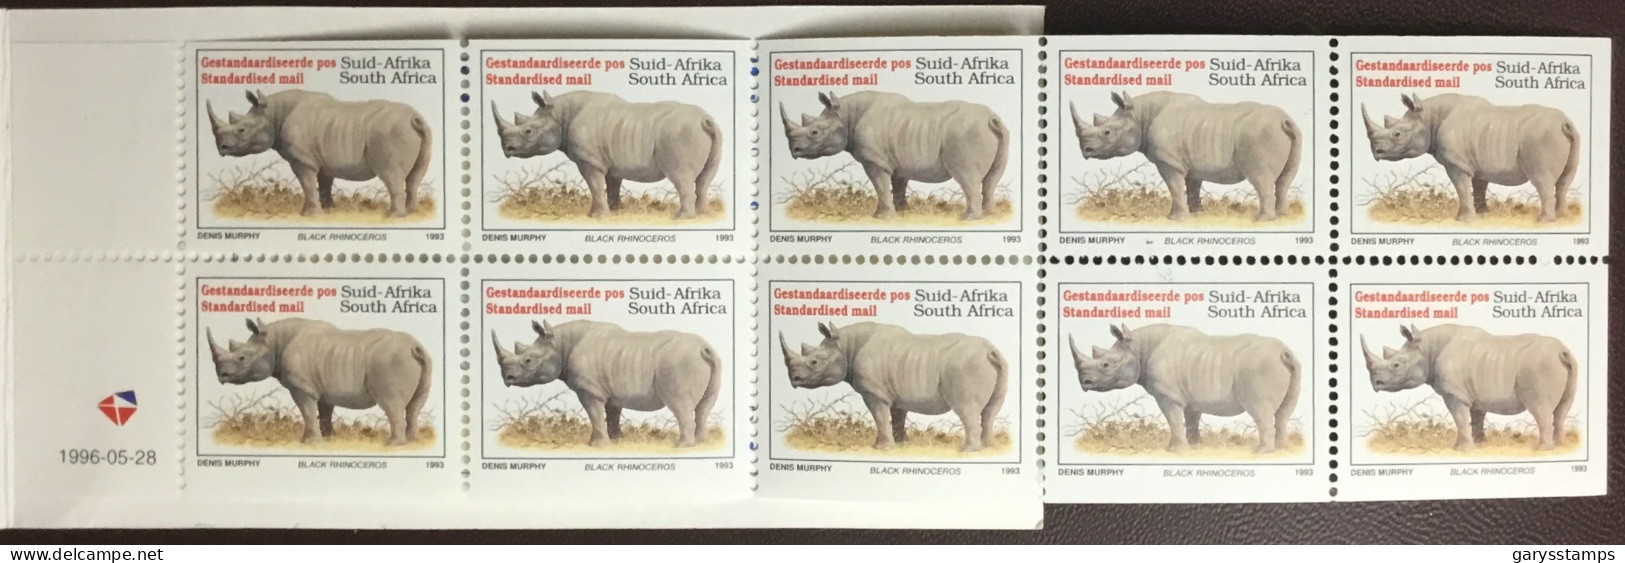 South Africa 1995 Standardised Mail Rhino Animals Booklet Unused - Rhinocéros